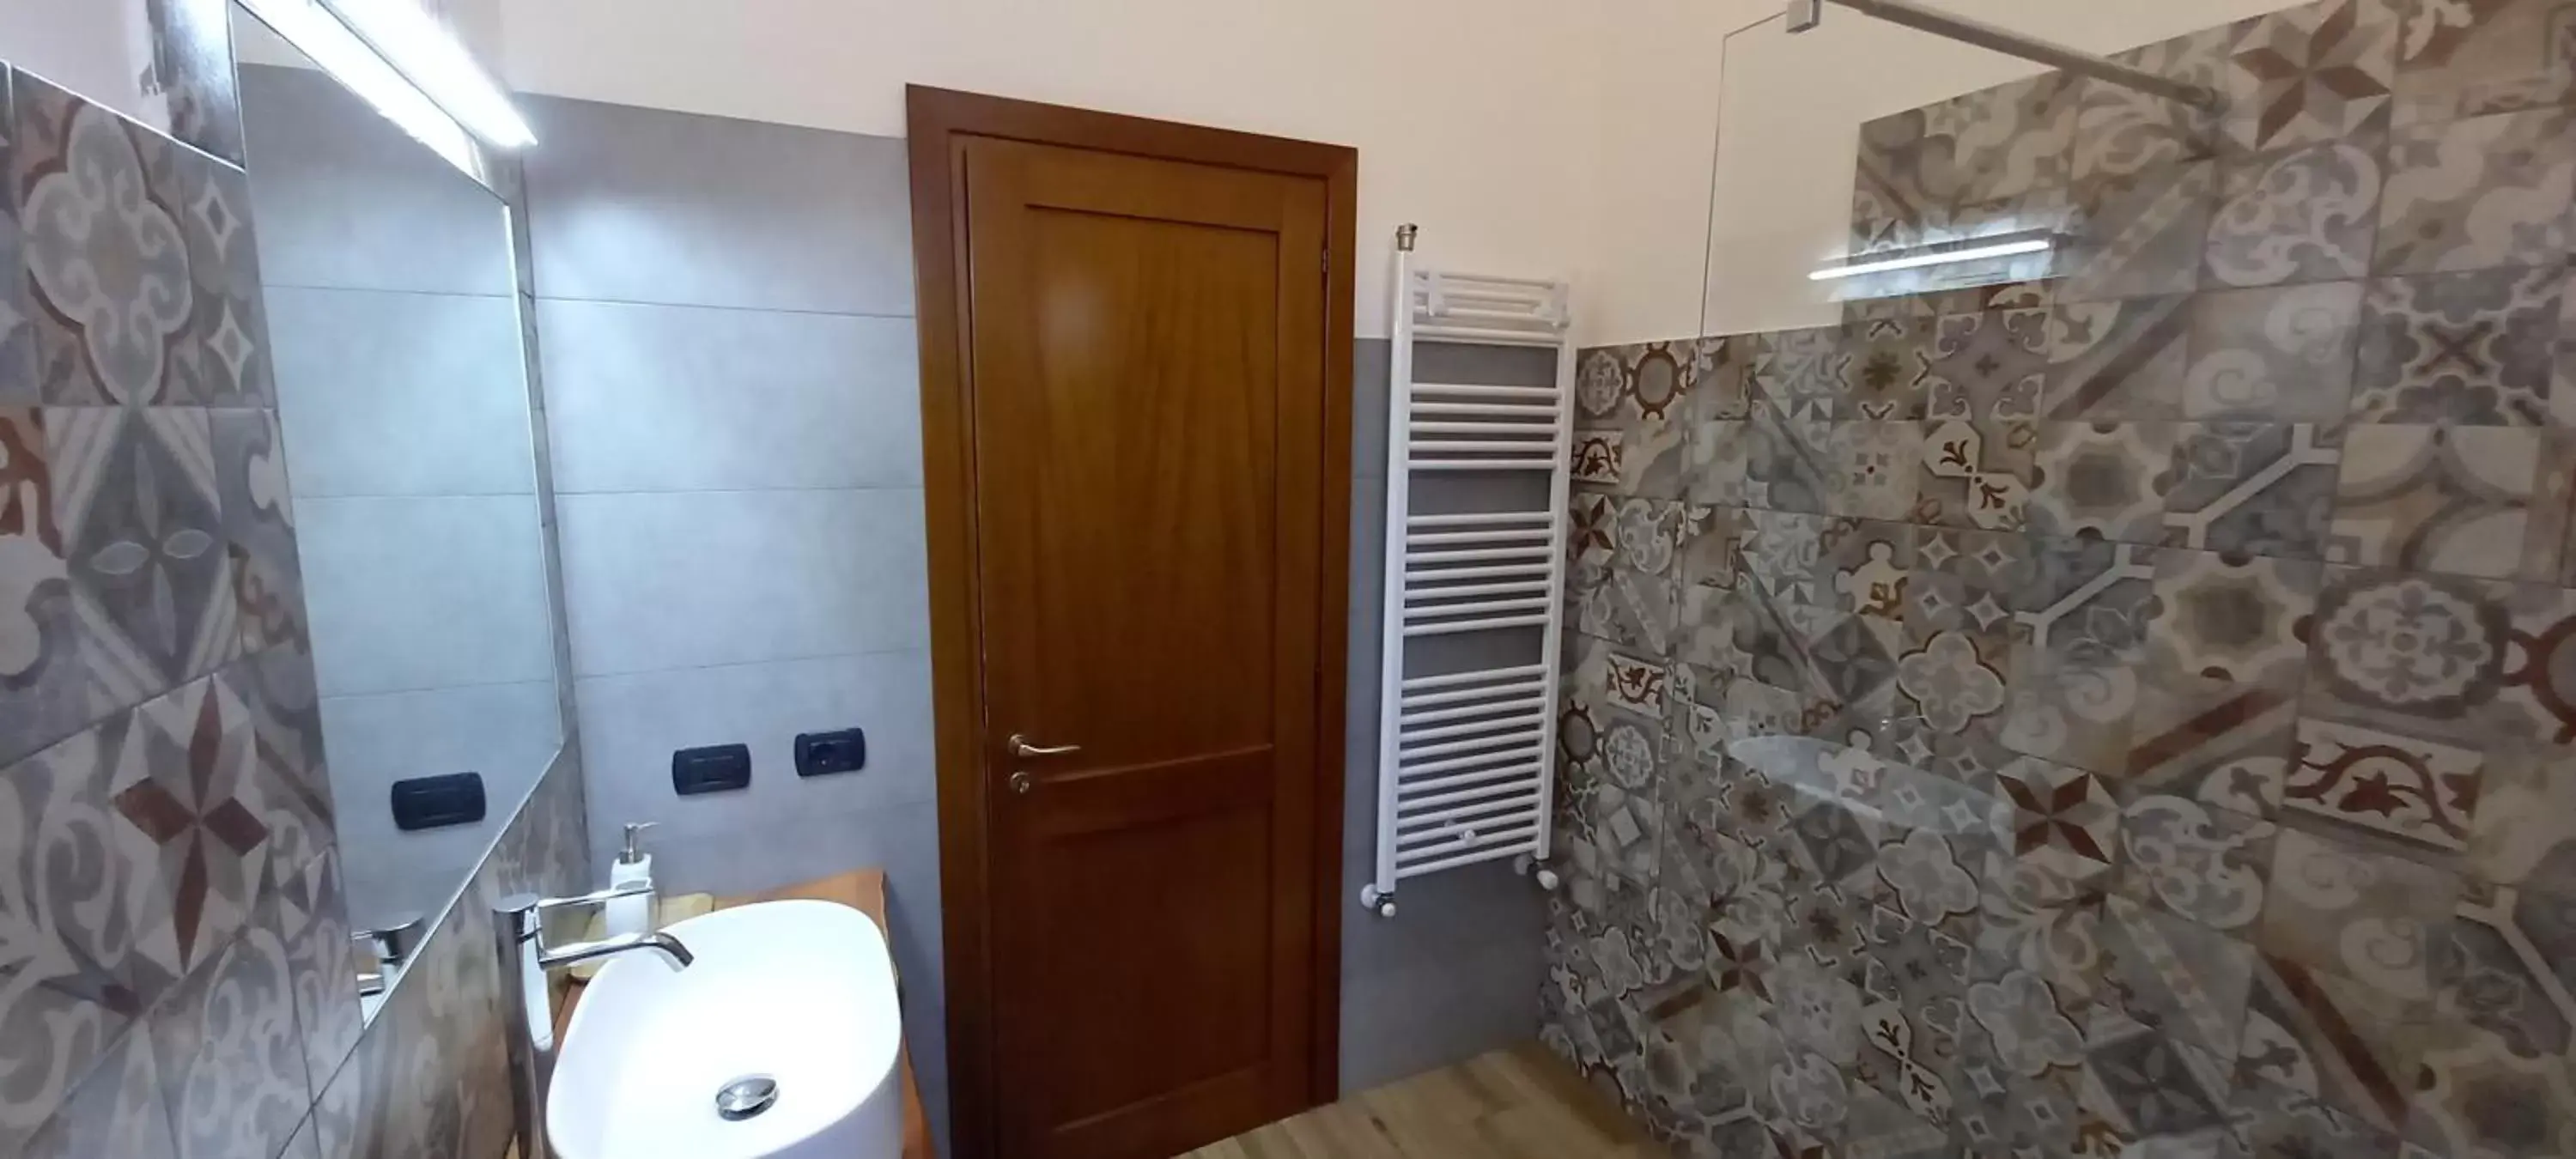 Bathroom in B&B Acanto Lecce